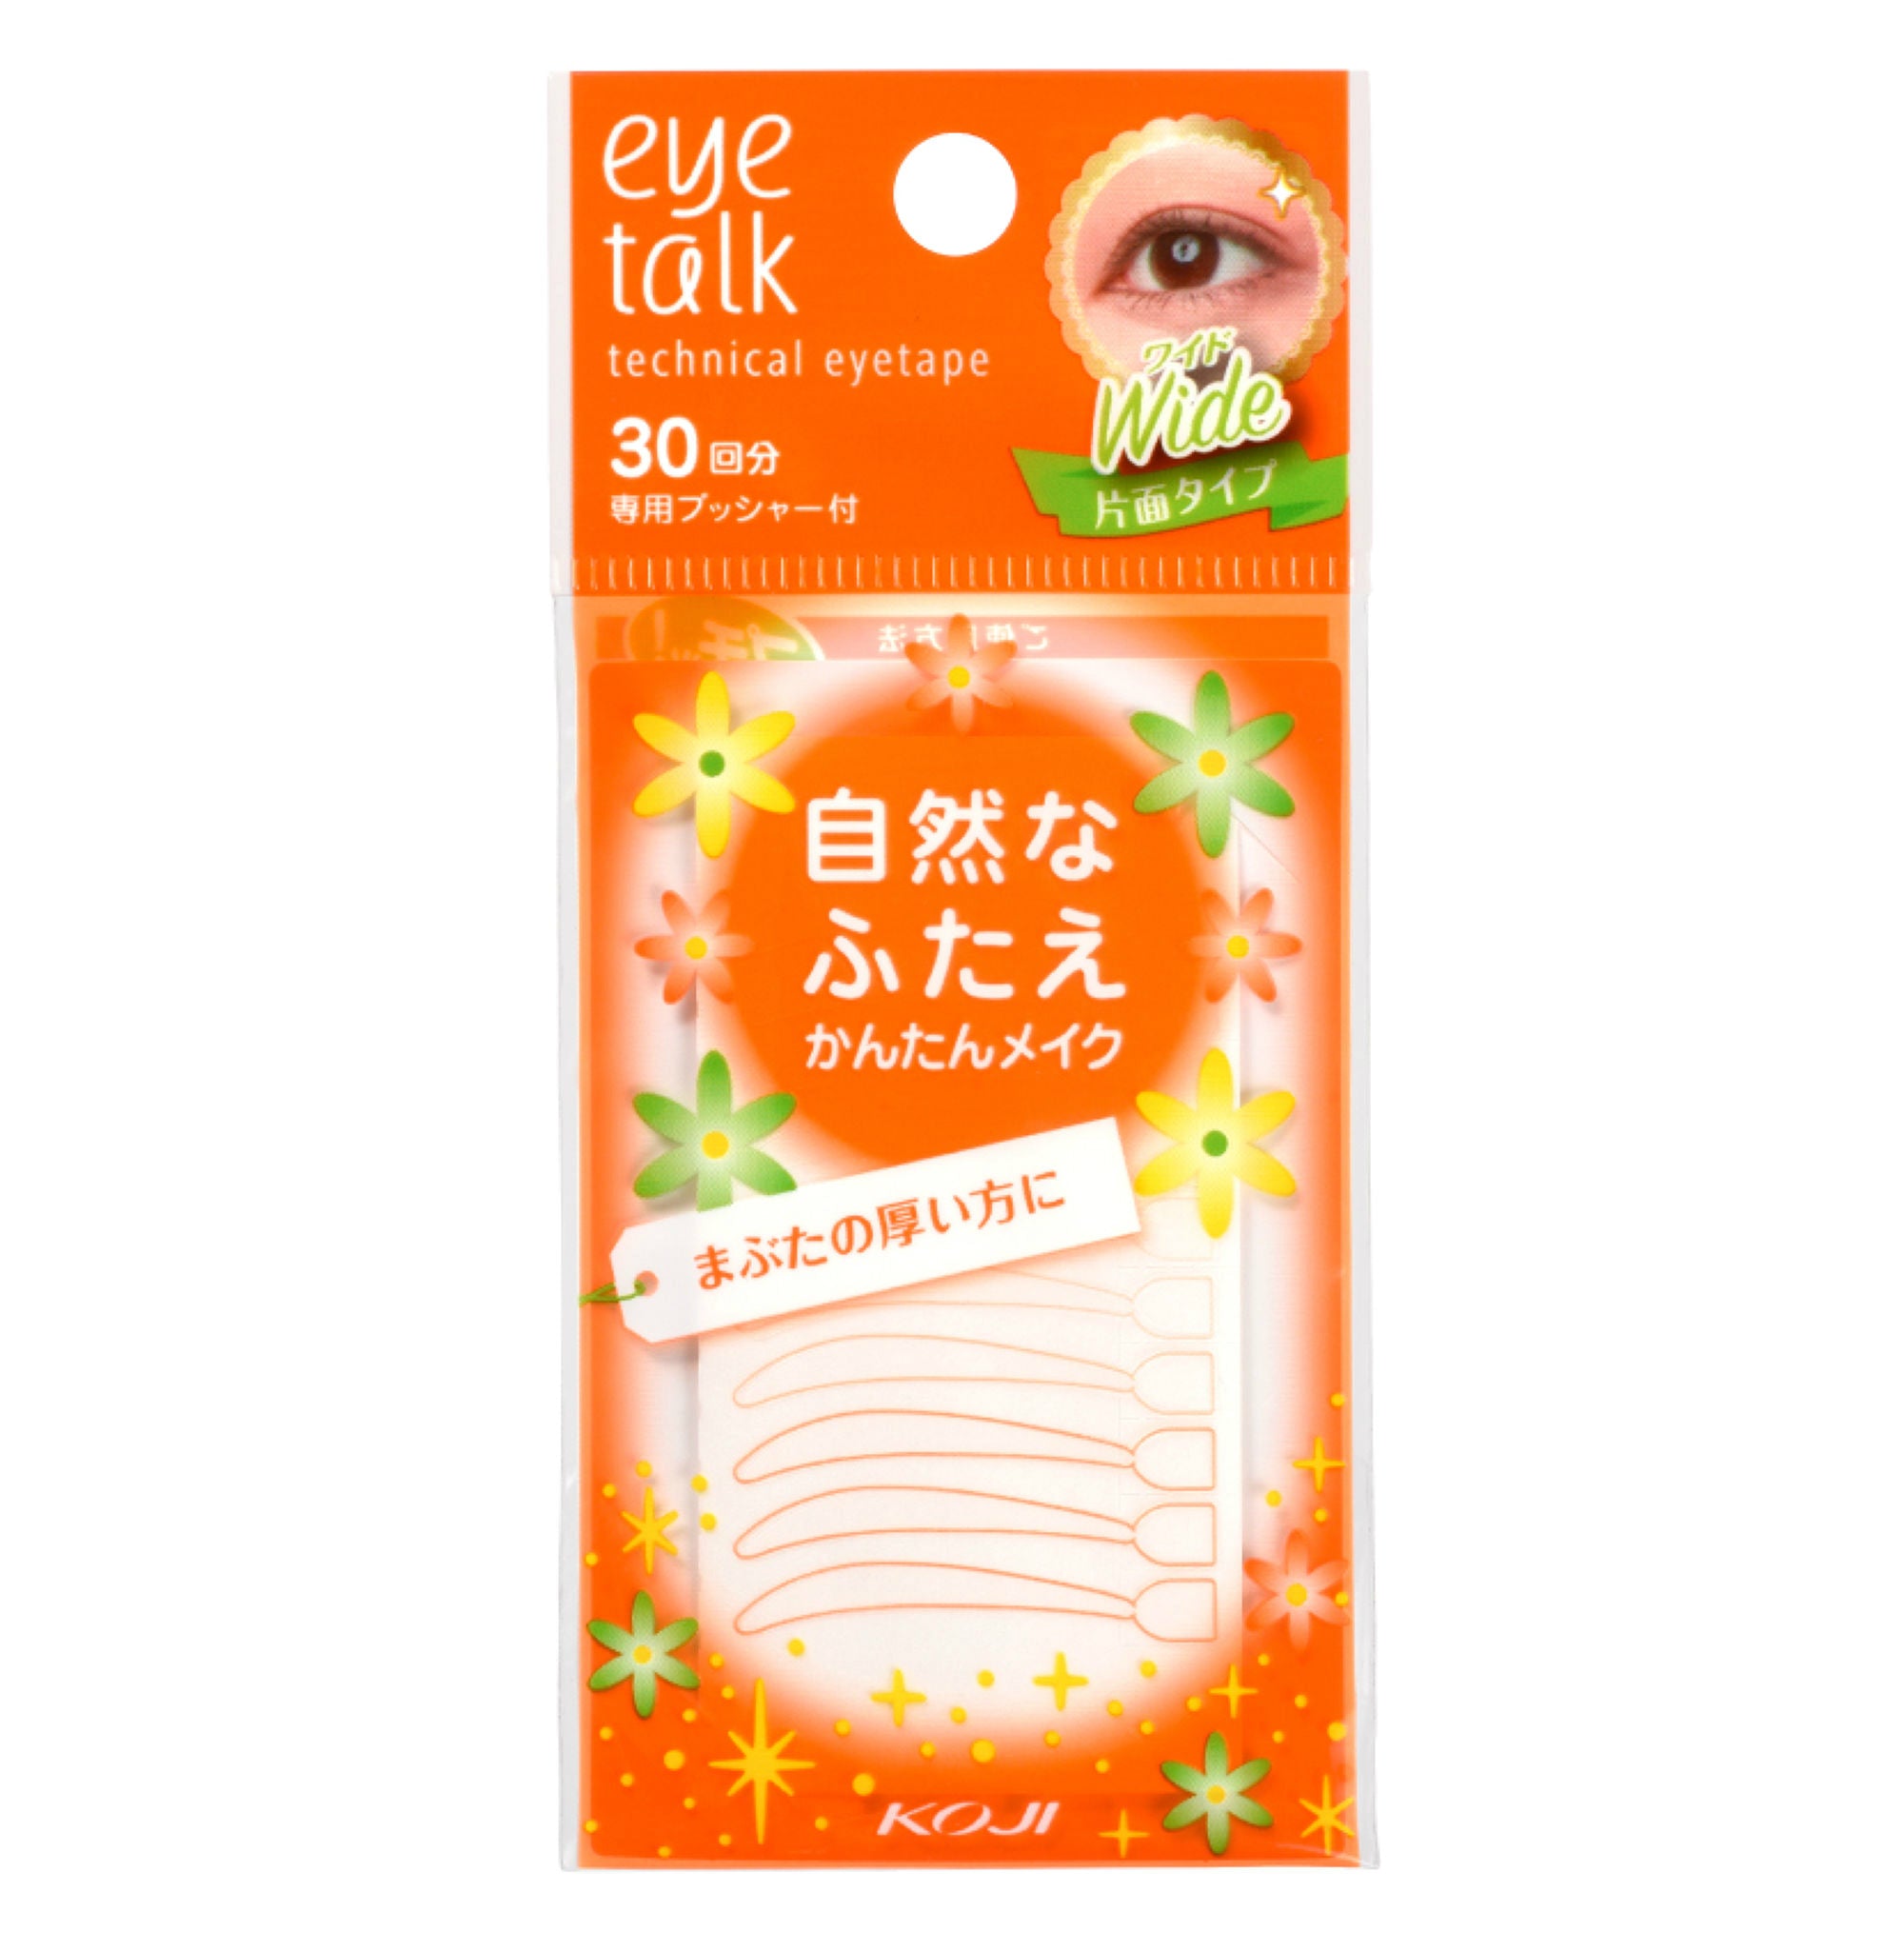 Koji Eye Talk Double Eyelid Technical Eye Tape - Wide Beauty Koji   